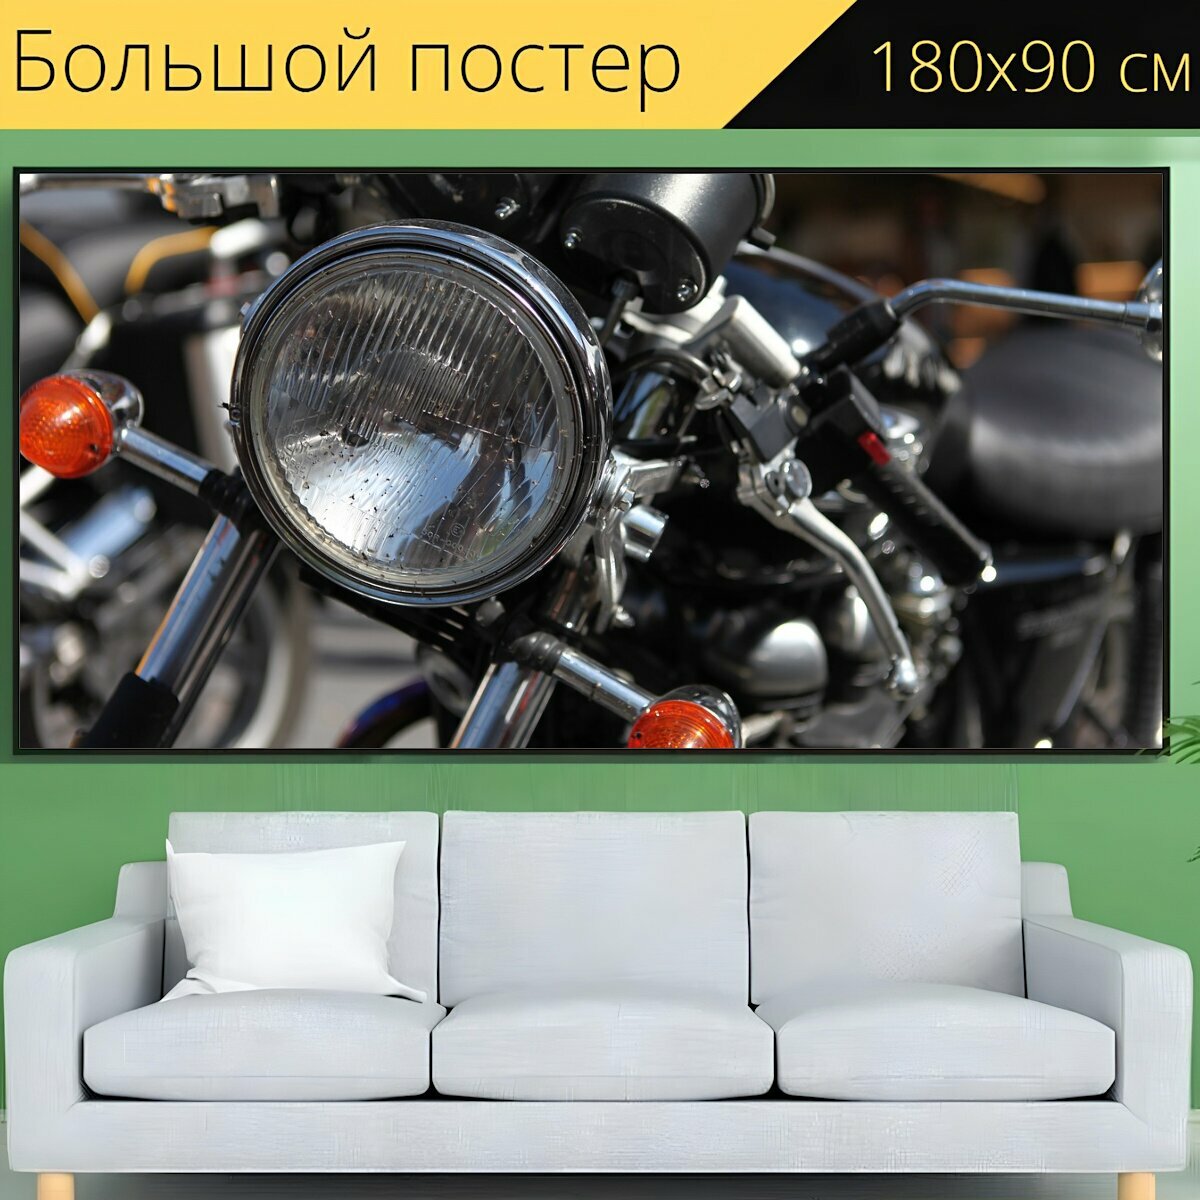 Большой постер "Мото, мотоцикл, мотоциклы" 180 x 90 см. для интерьера